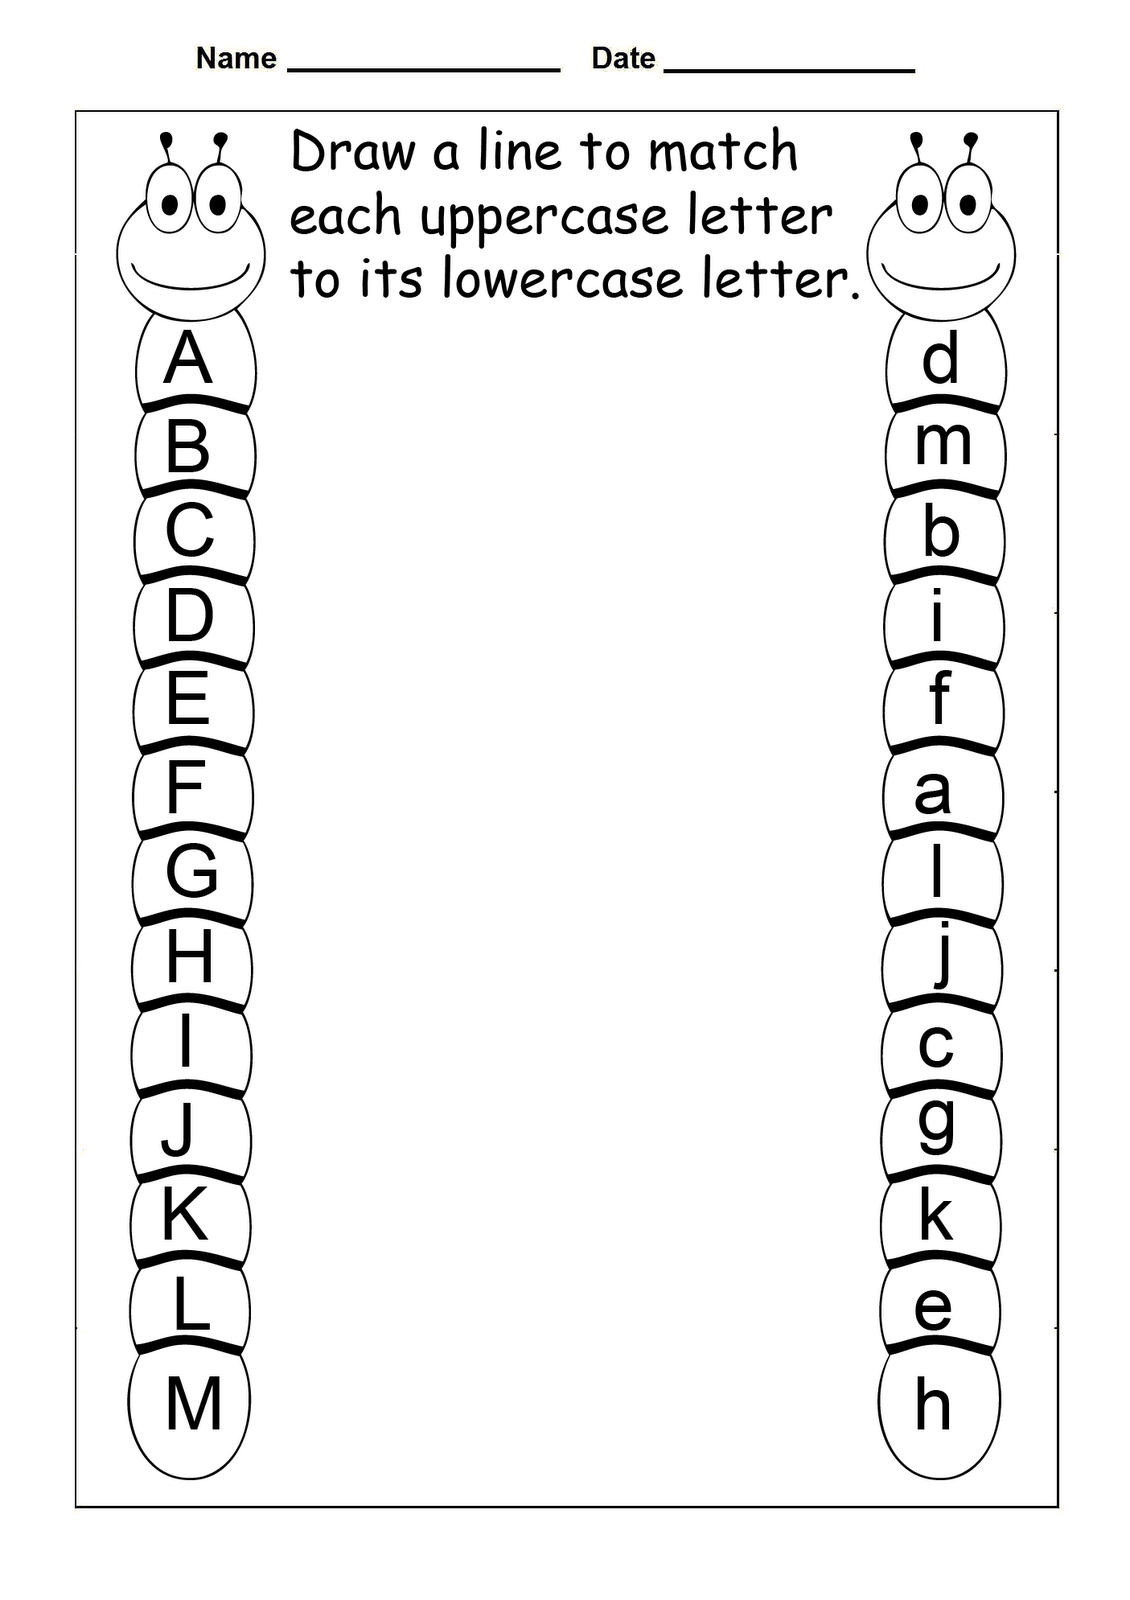 prek-english-worksheet-match-starting-alphabets-lowercase-alphabet-kindergarten-worksheets